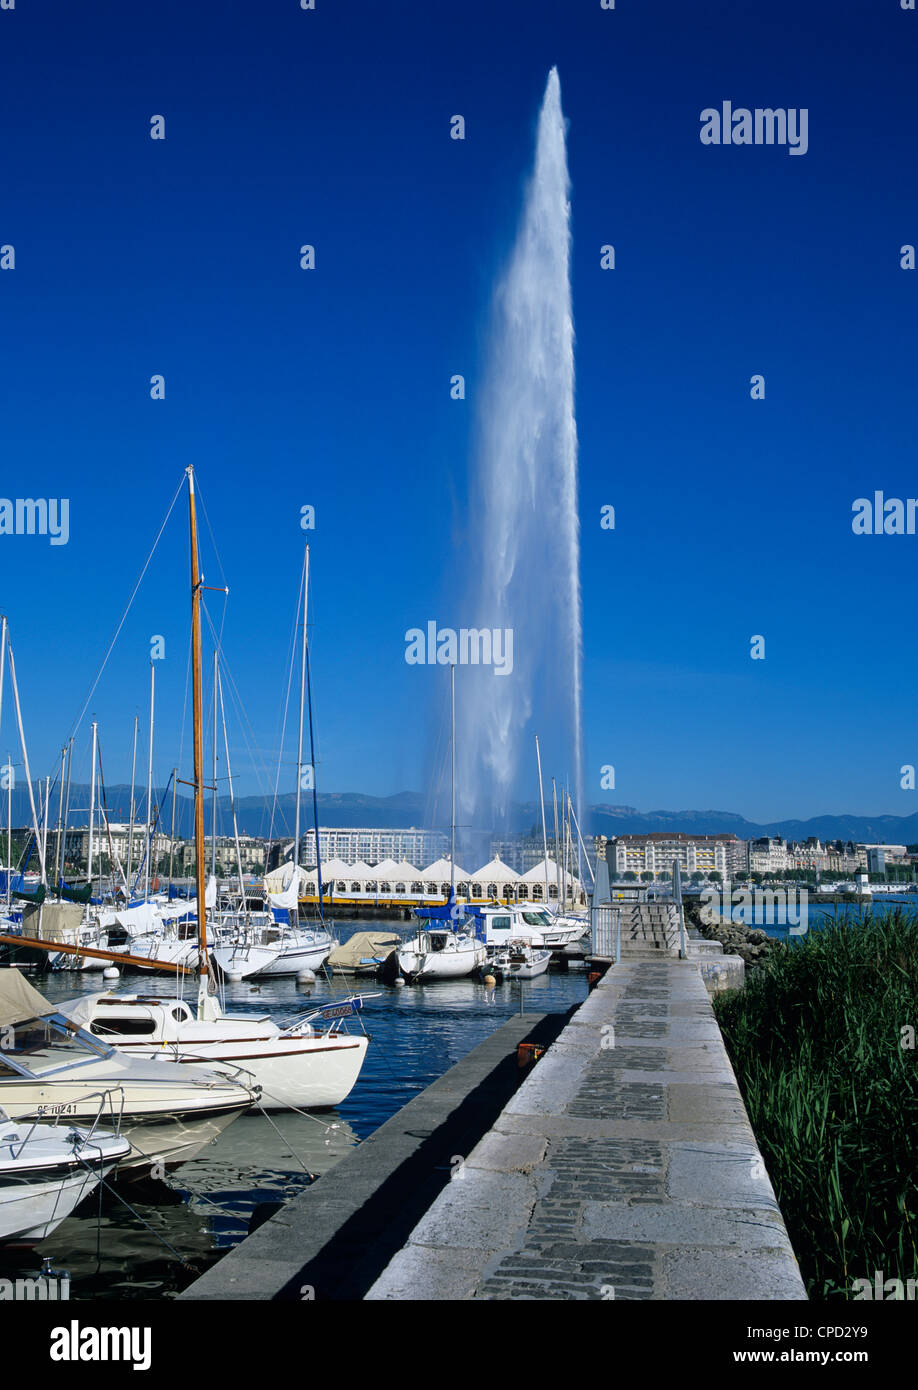 Jet d'eau (water jet), Lake Geneva, Geneva, Switzerland, Europe Stock Photo